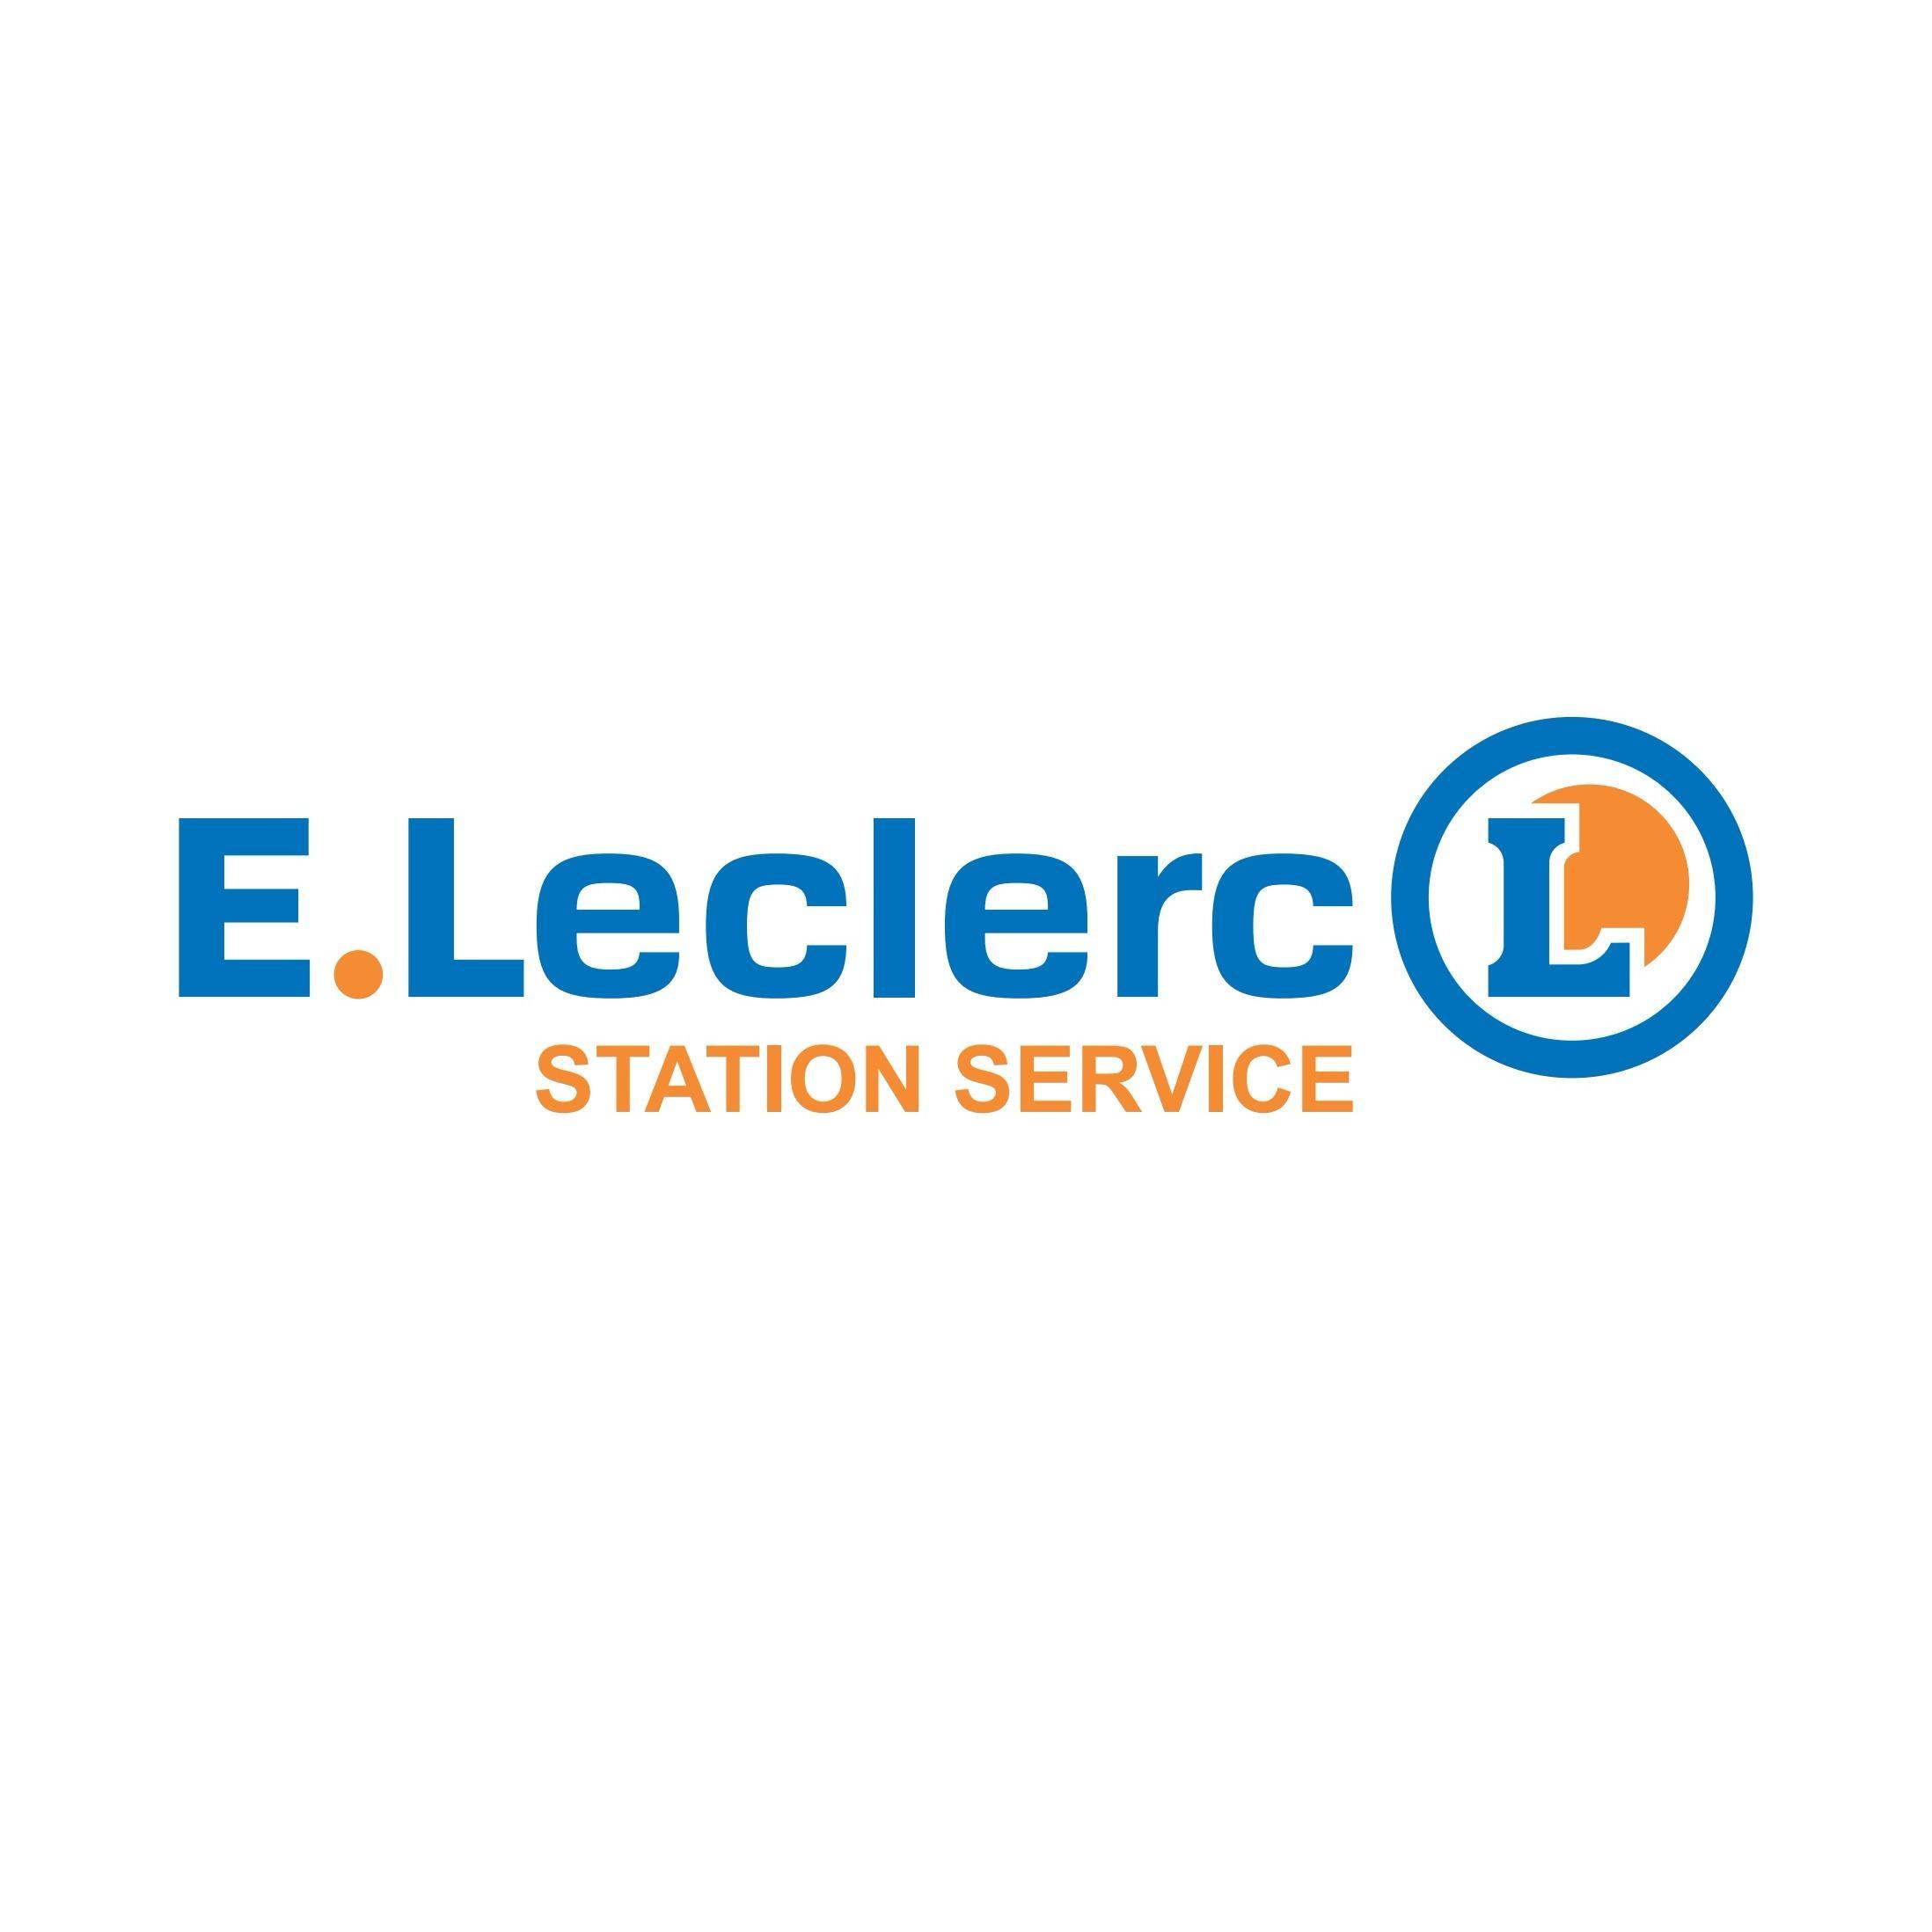 E.leclerc Station Service Tulle